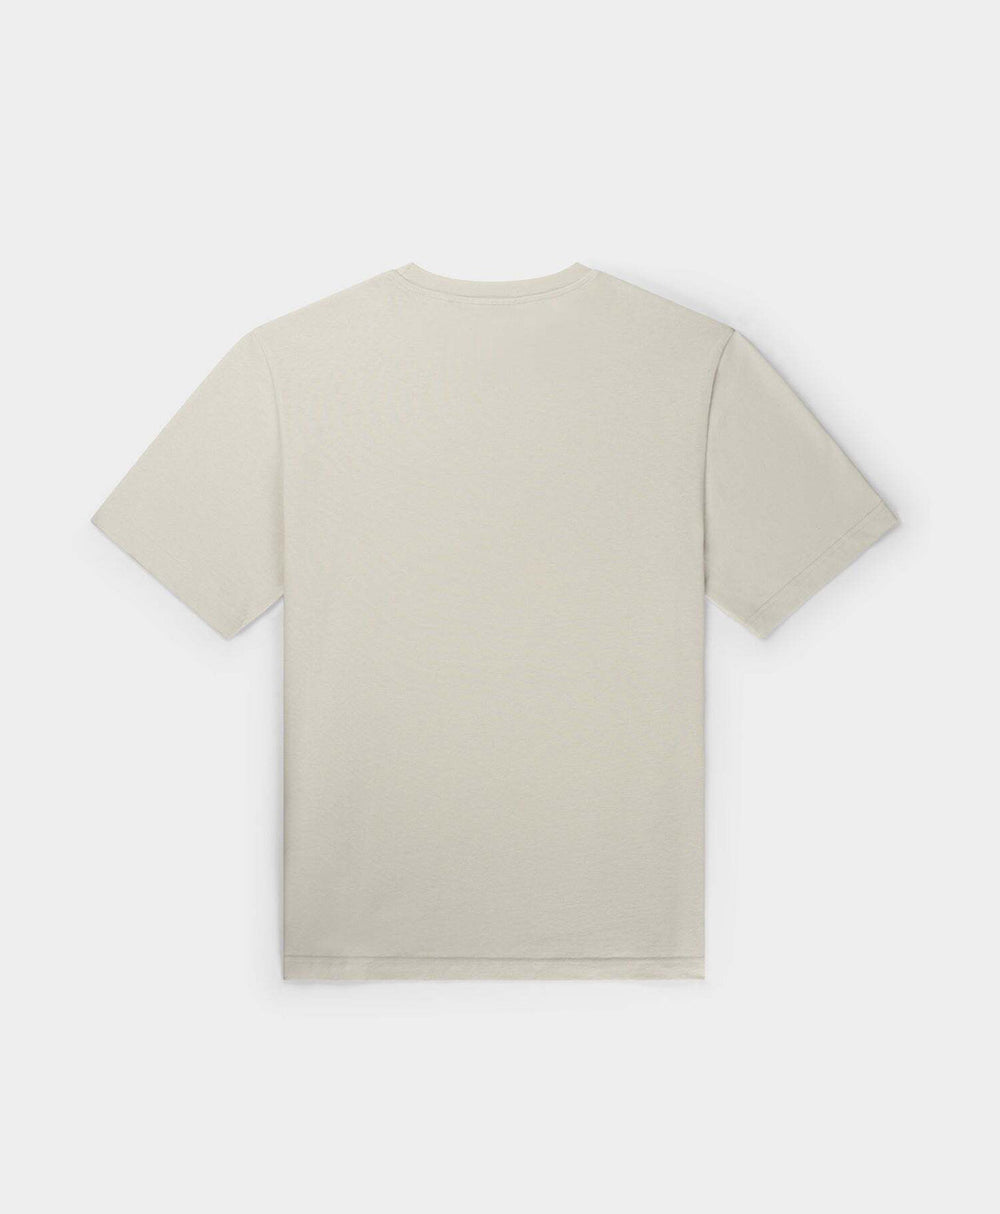 DP - White Sand Circle T-Shirt - Packshot - Rear